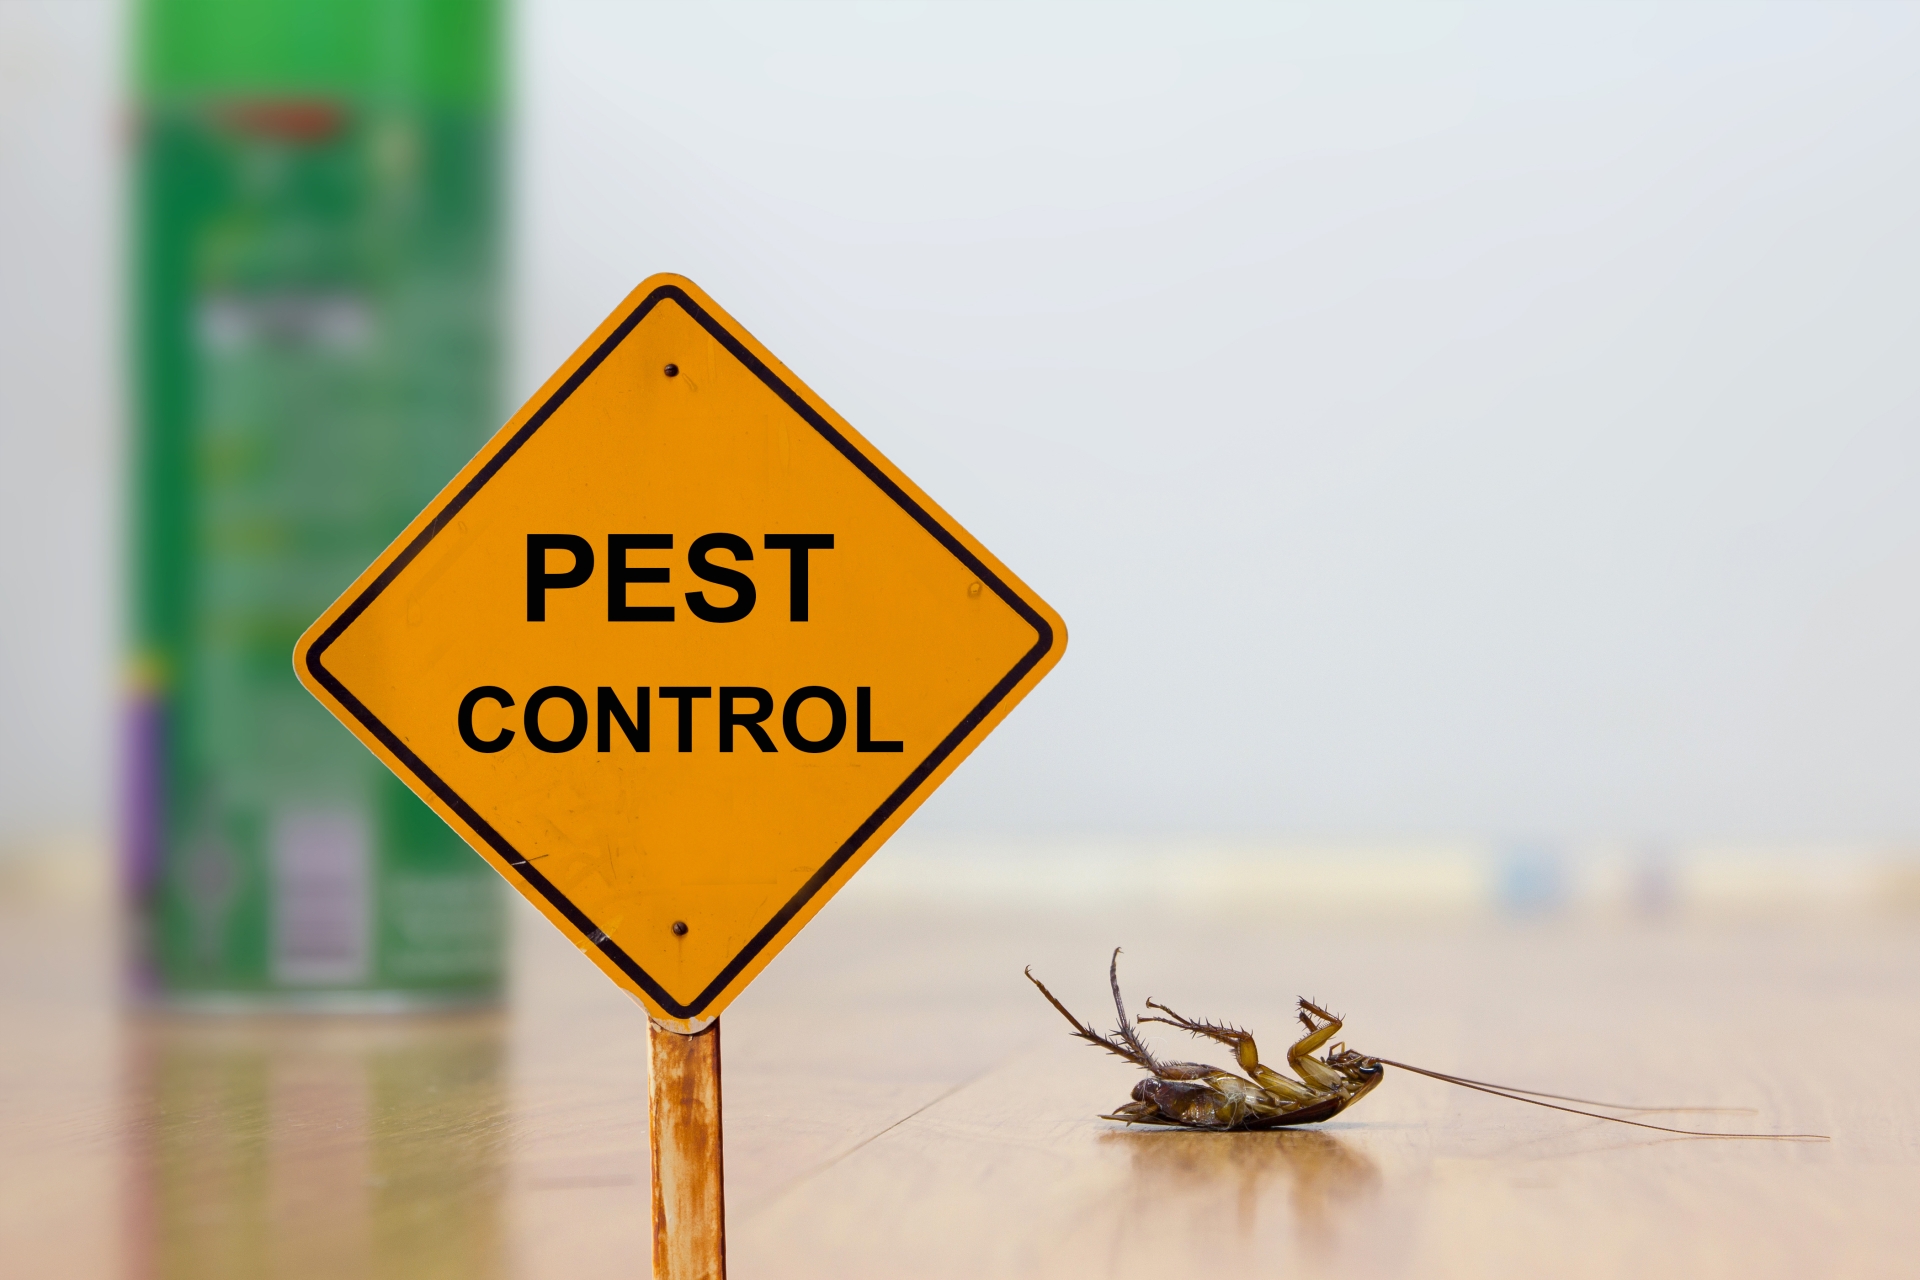 24 Hour Pest Control, Pest Control in West Drayton, Harmondsworth, Sipson, UB7. Call Now 020 8166 9746